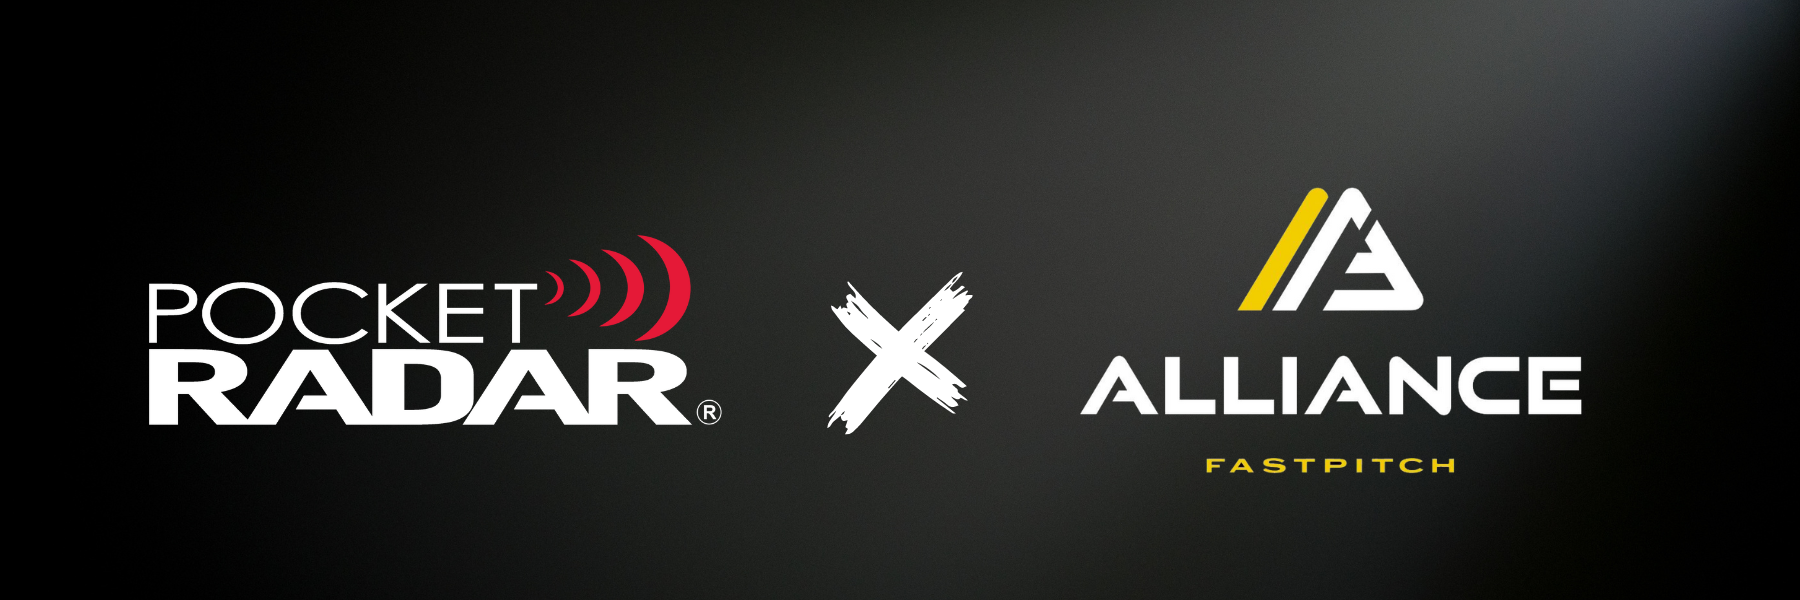 Pocket Radar X The Alliance Banner Image